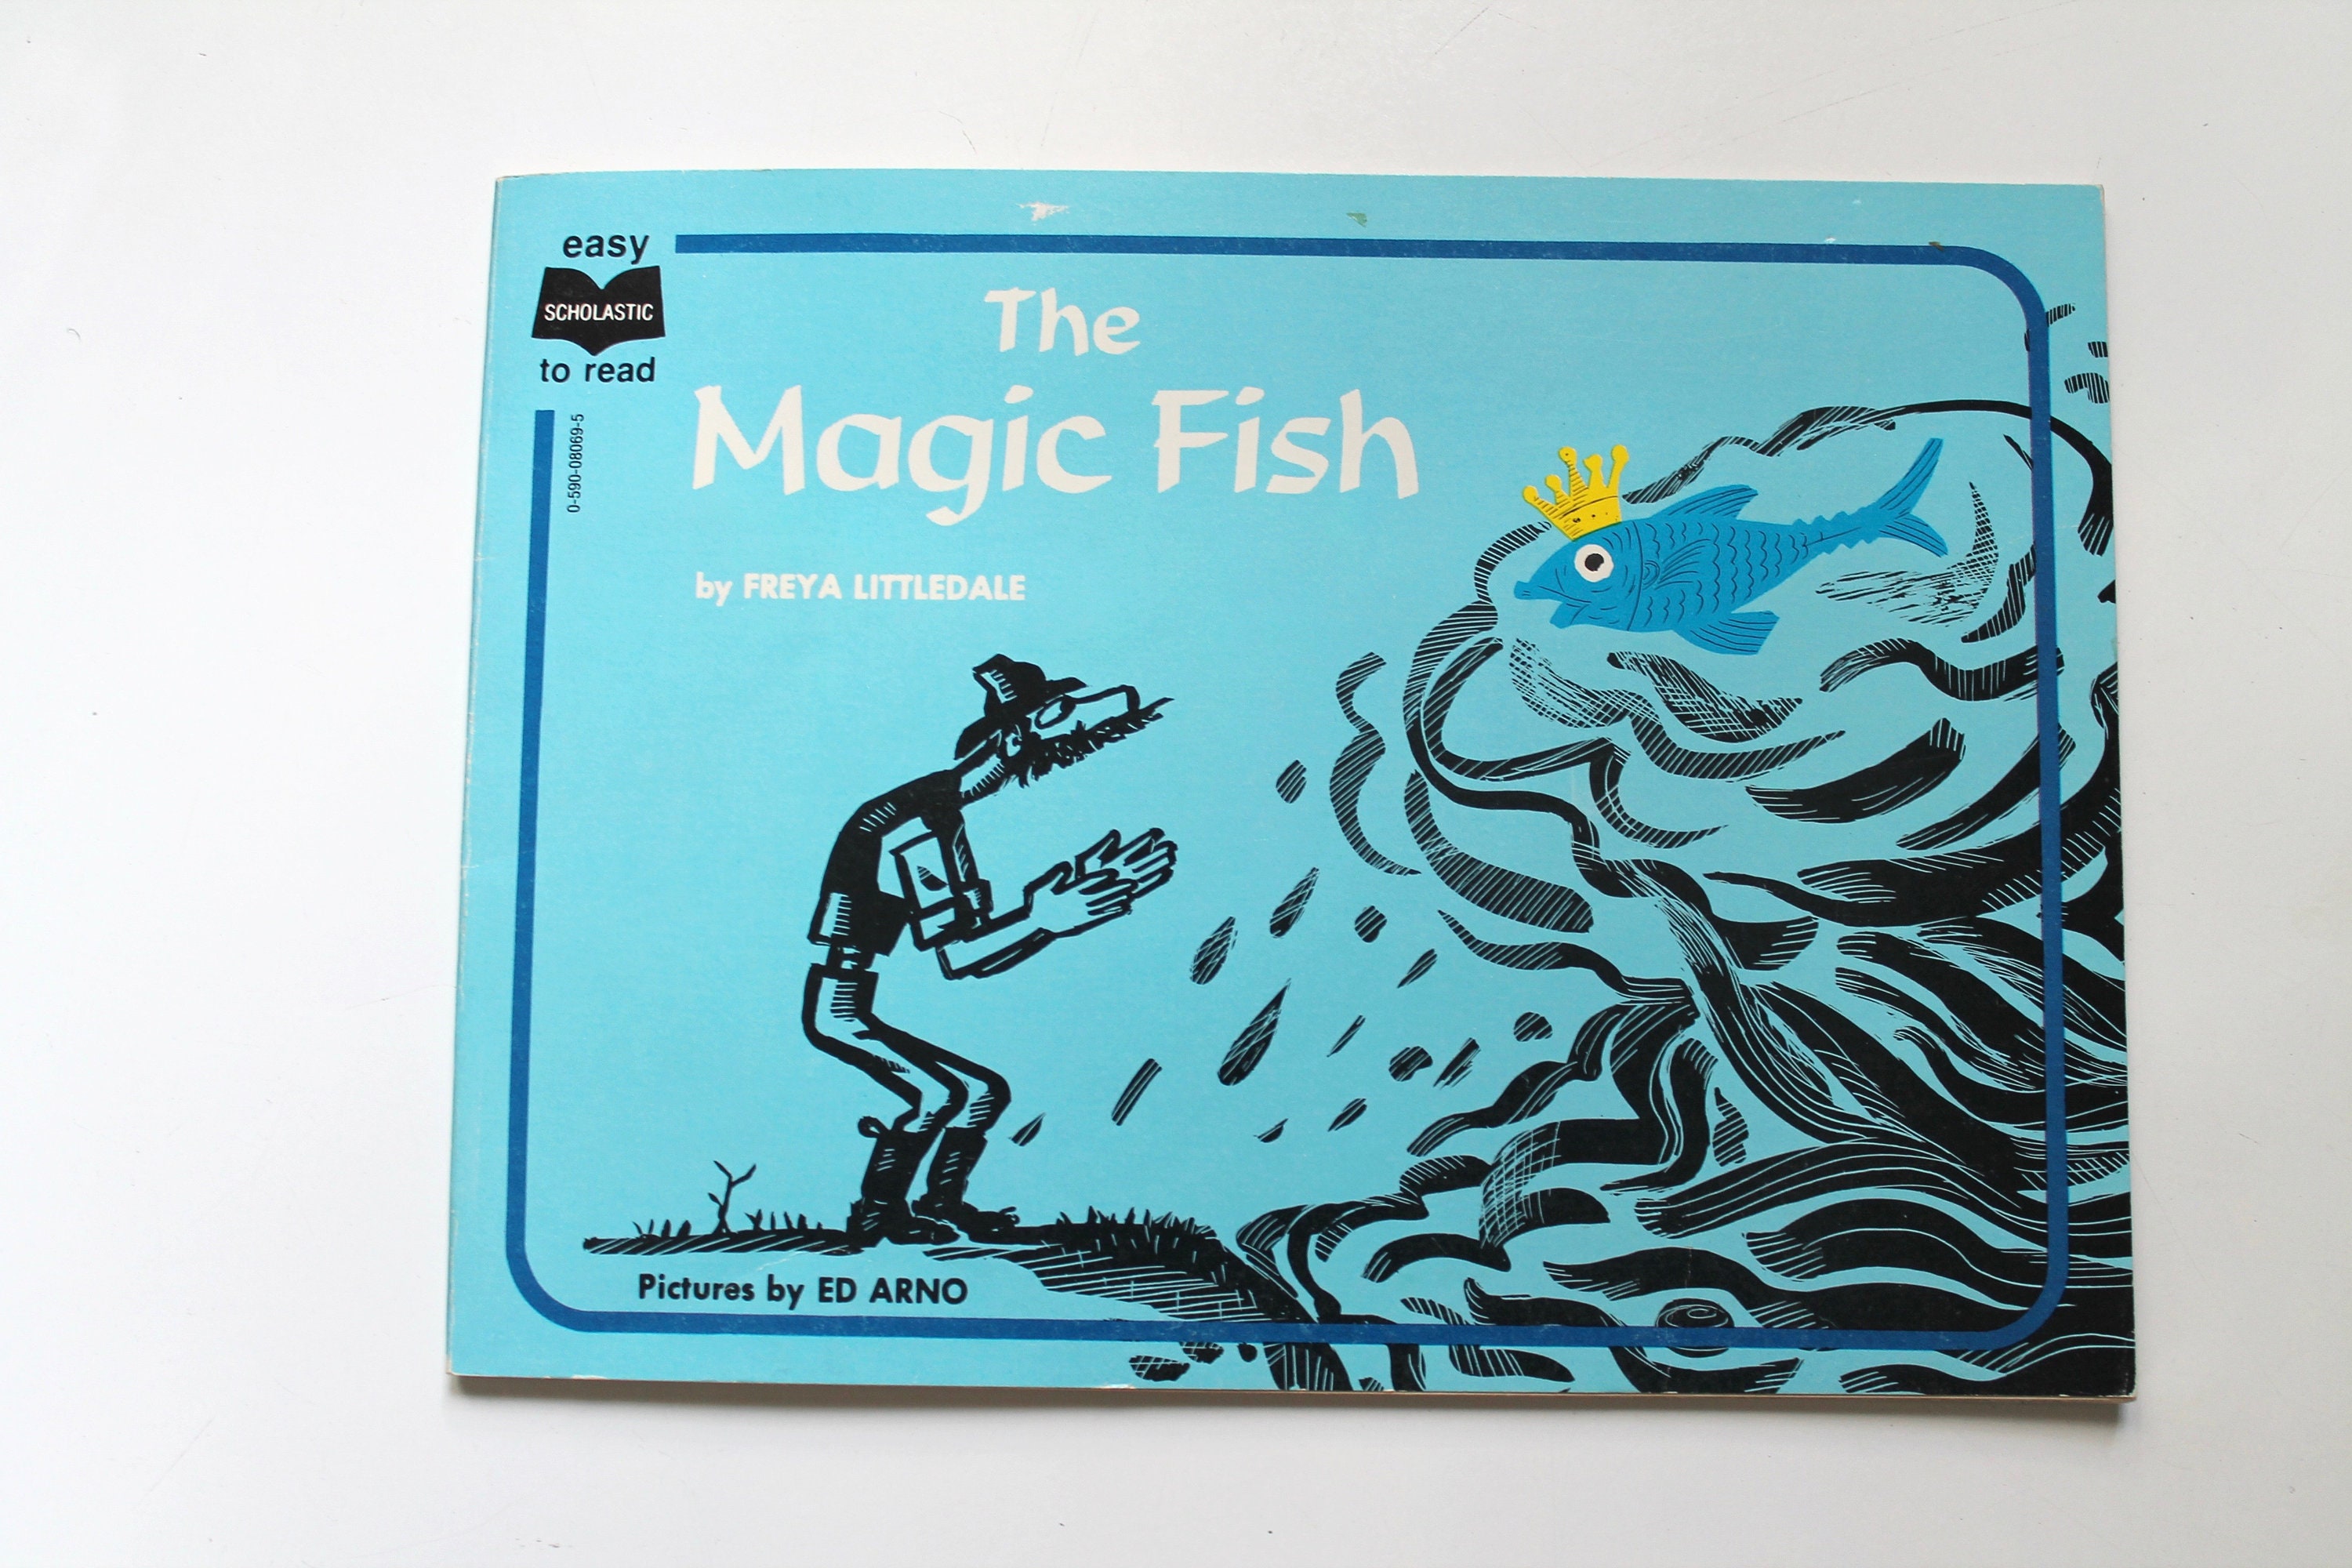 The Magic Fish By Freya Littledale 1967 RARE